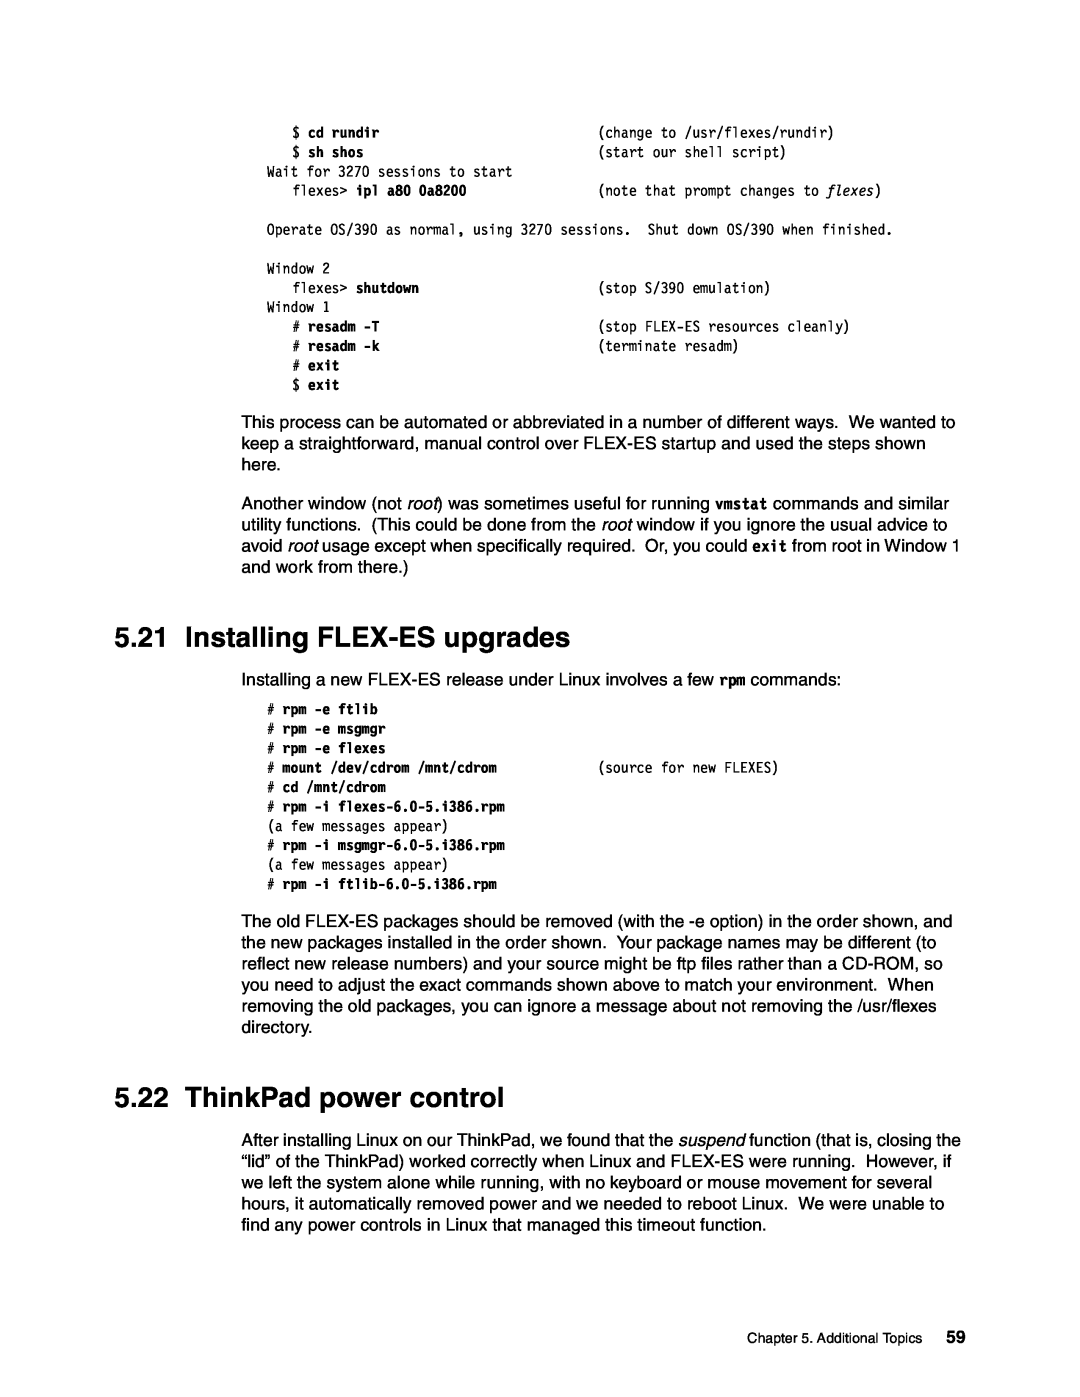 IBM s/390 manual Installing FLEX-ES upgrades, ThinkPad power control 